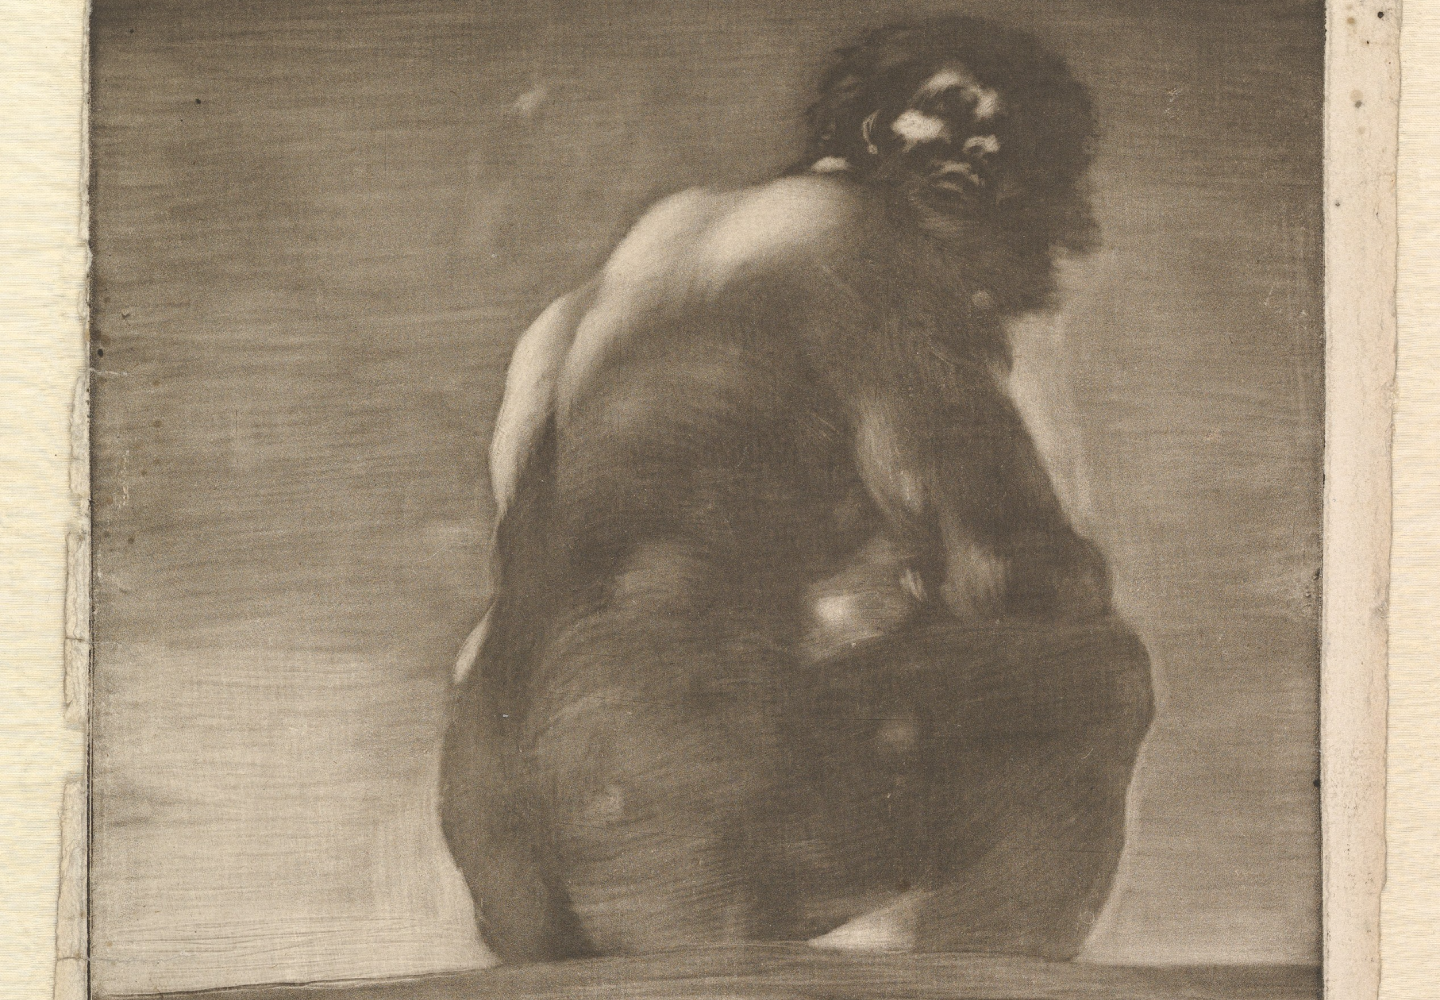 Artists on Artworks: Monika Weiss on Francisco Goya